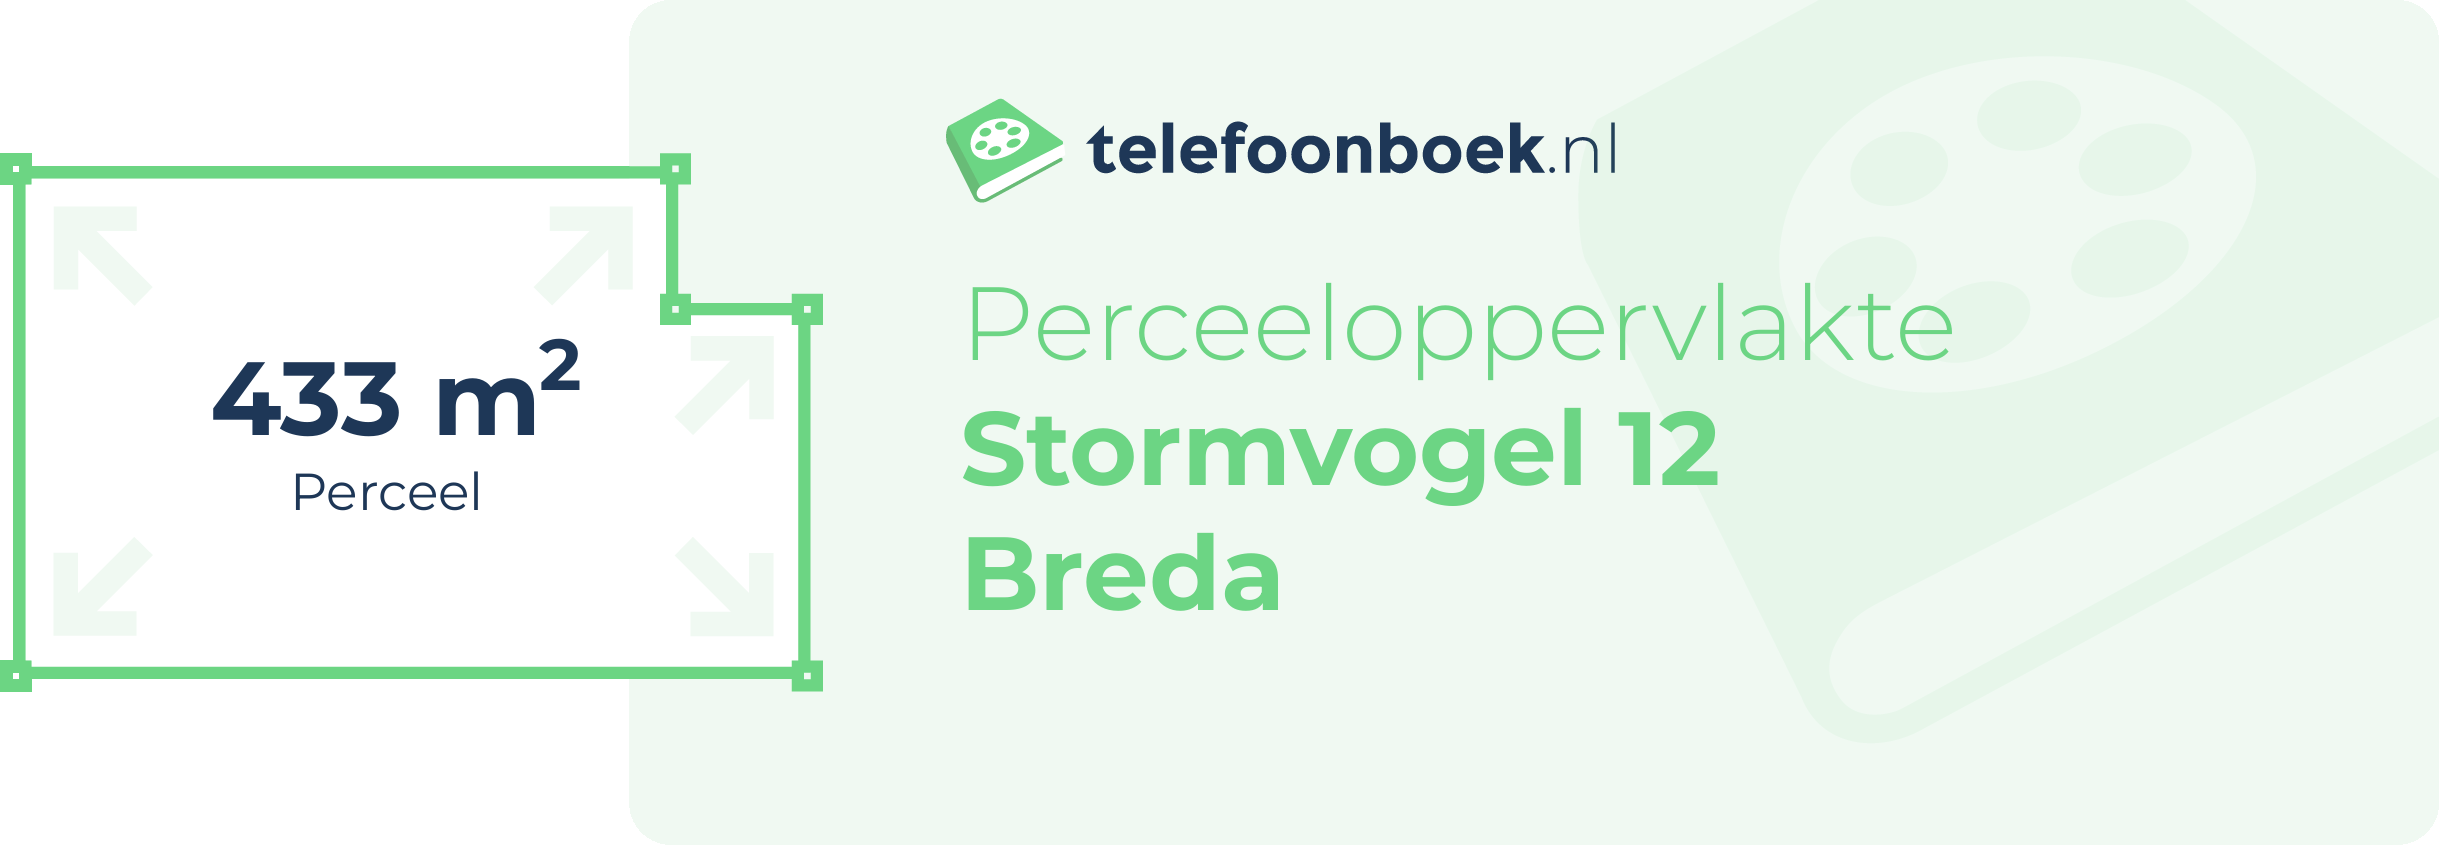 Perceeloppervlakte Stormvogel 12 Breda